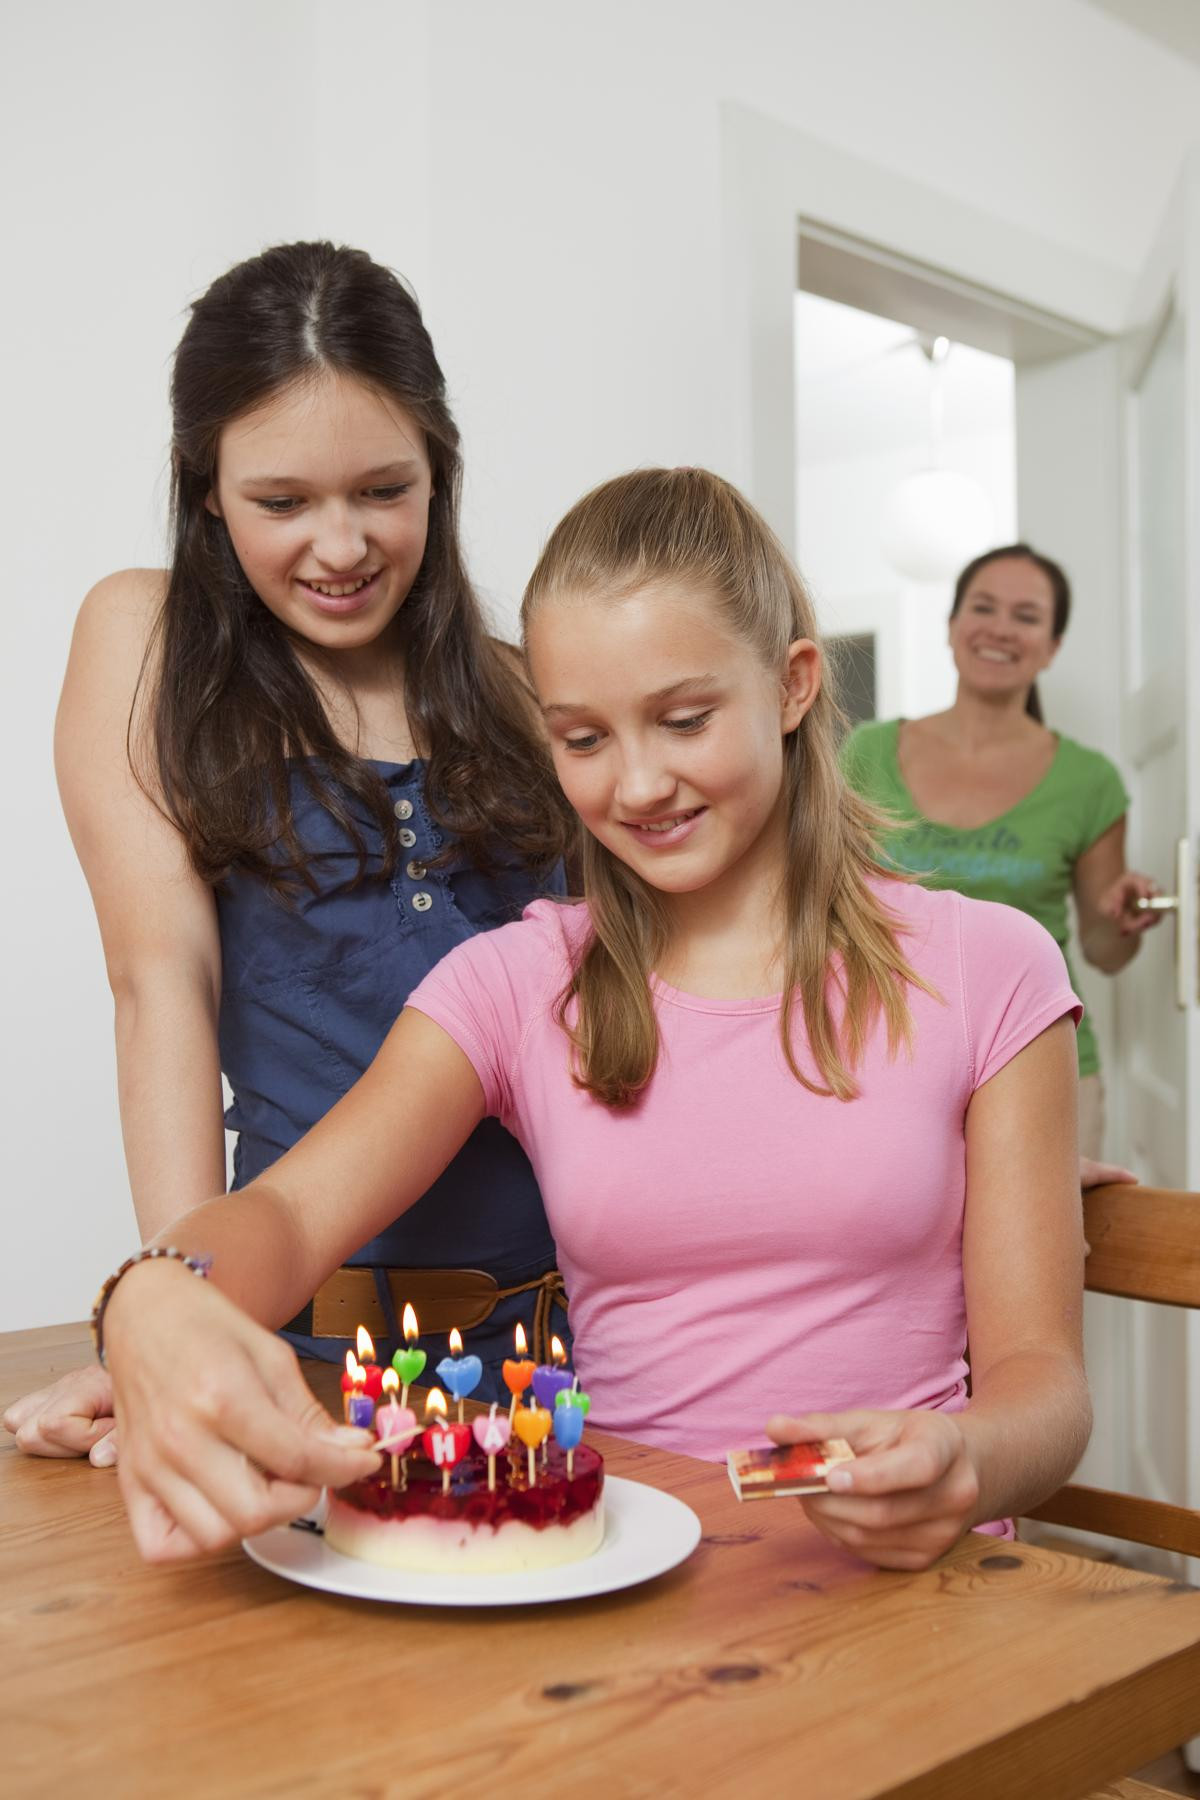 13 Yr Old Girl Birthday Party Ideas
 Party Ideas for 13 year old Girls Birthday Frenzy